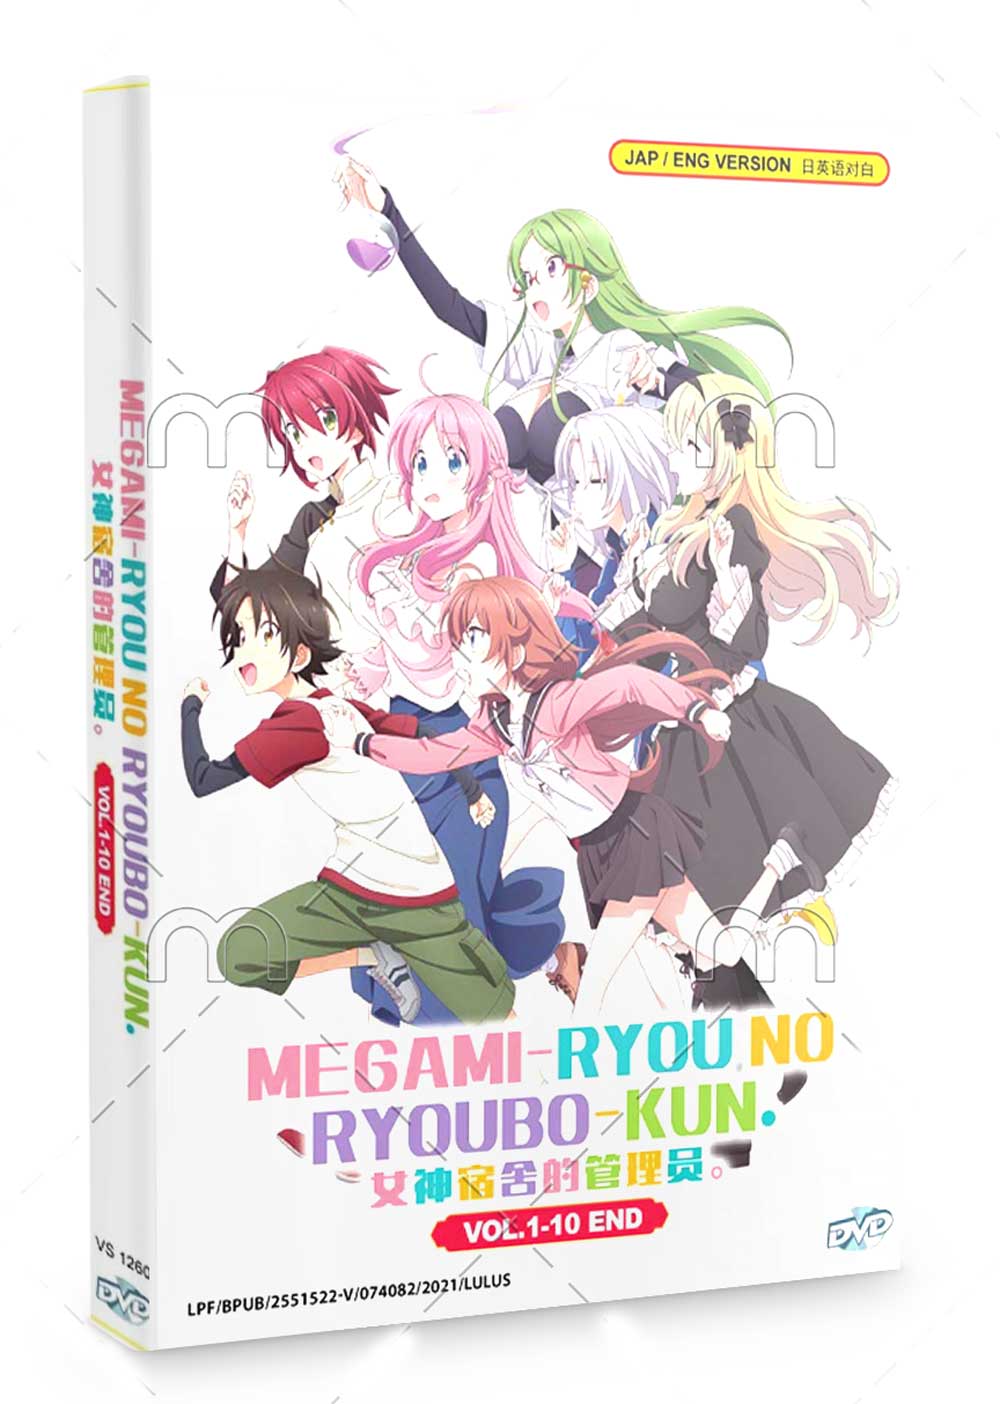 El anime Megami-ryou no Ryoubo-kun revela los detalles de su segundo  Blu-ray BOX — Kudasai